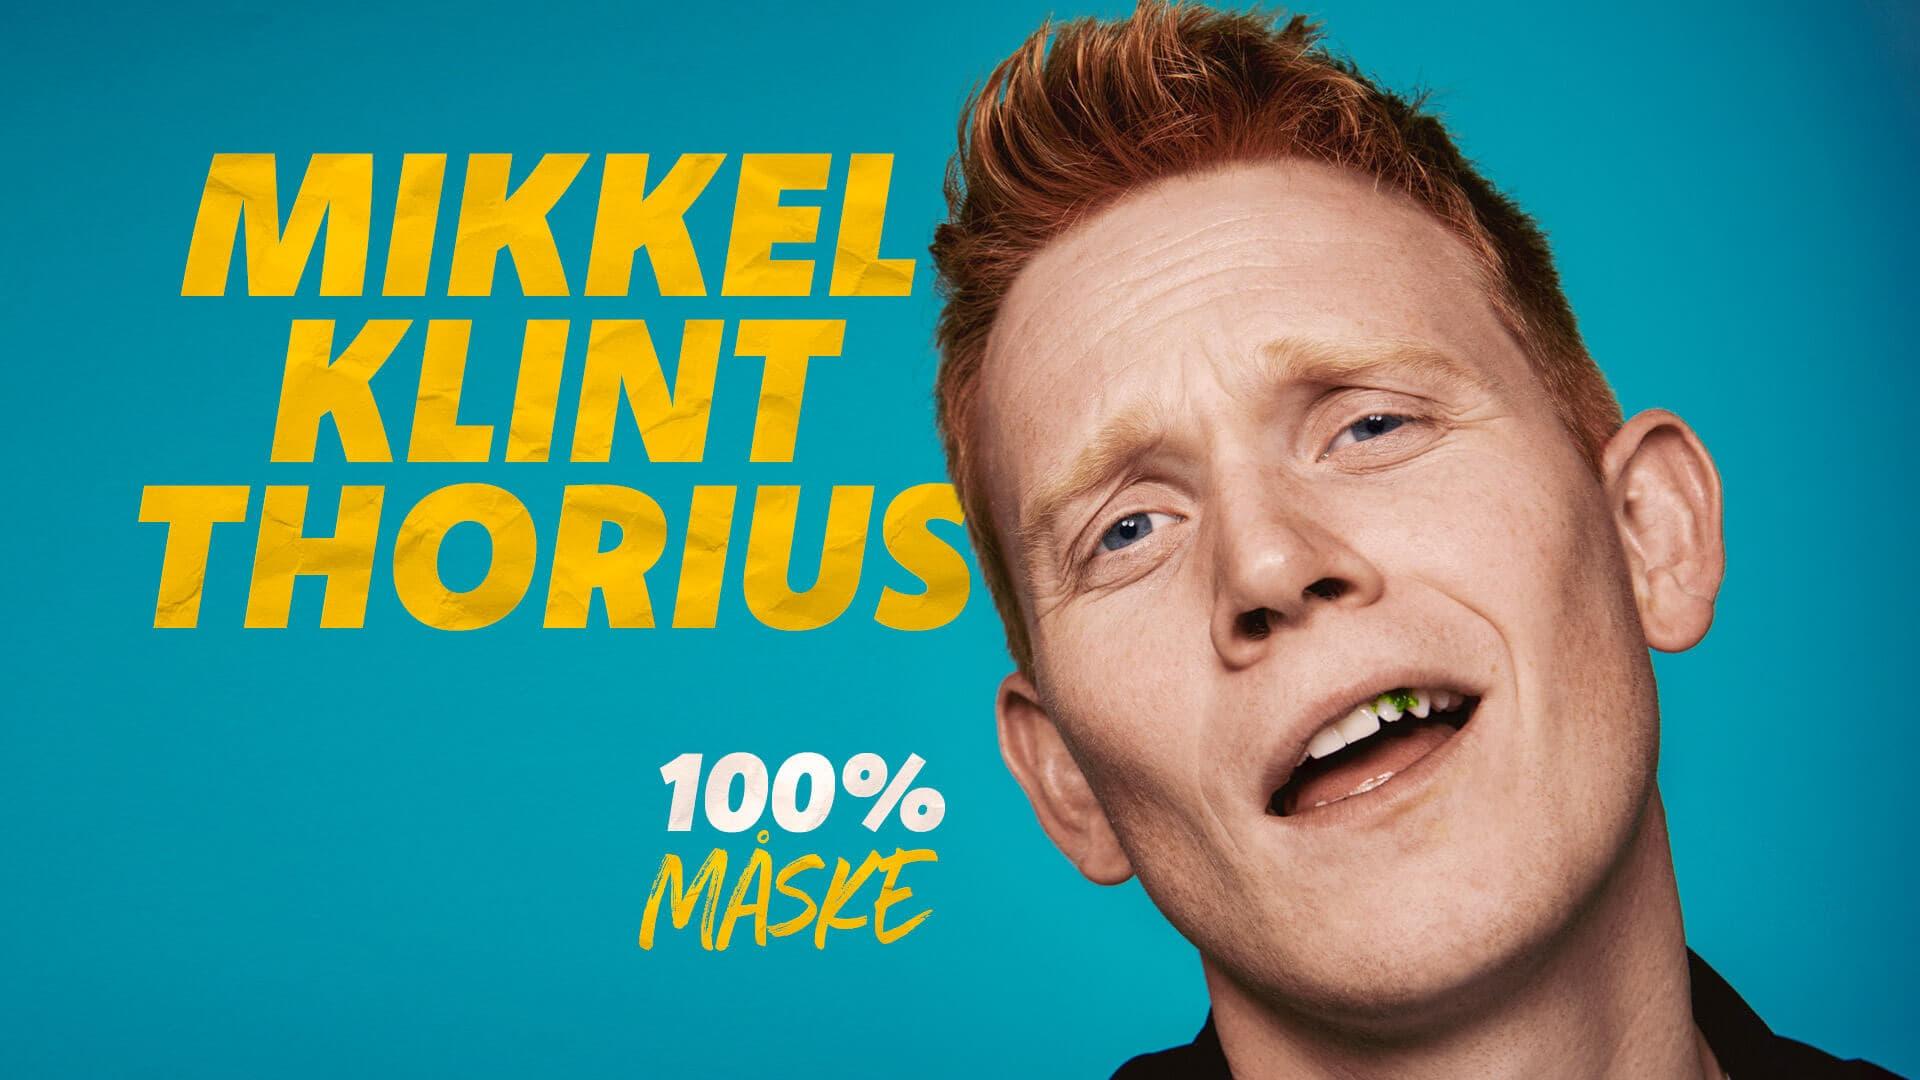 Mikkel Klint Thorius backdrop